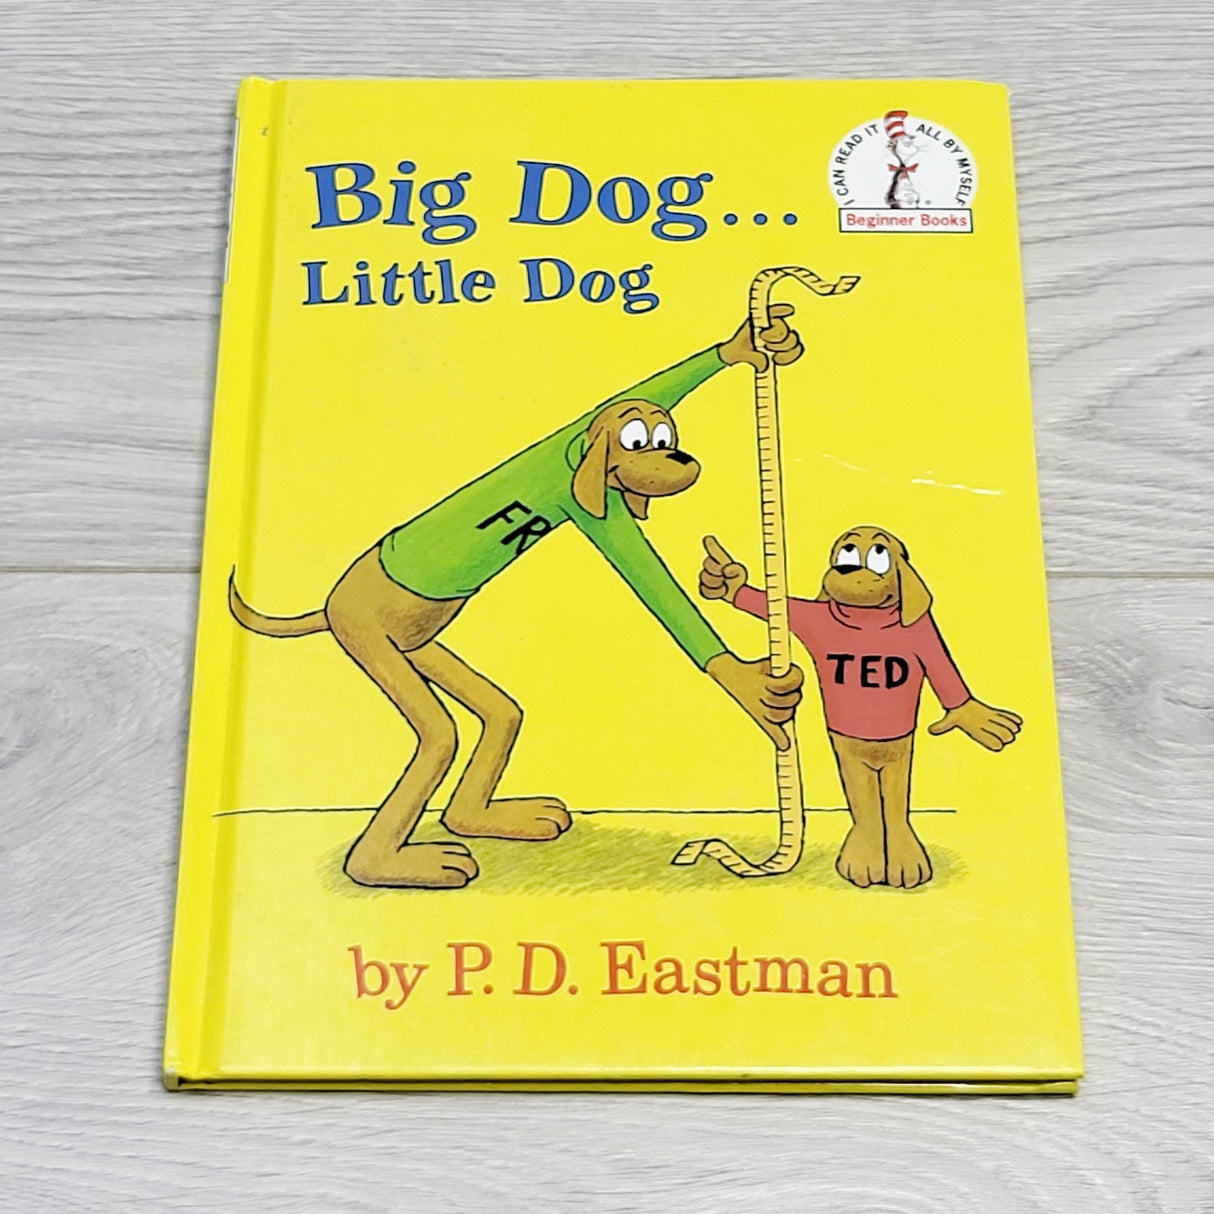 SPLT1 - Big Dog...Little Dog. Hardcover book